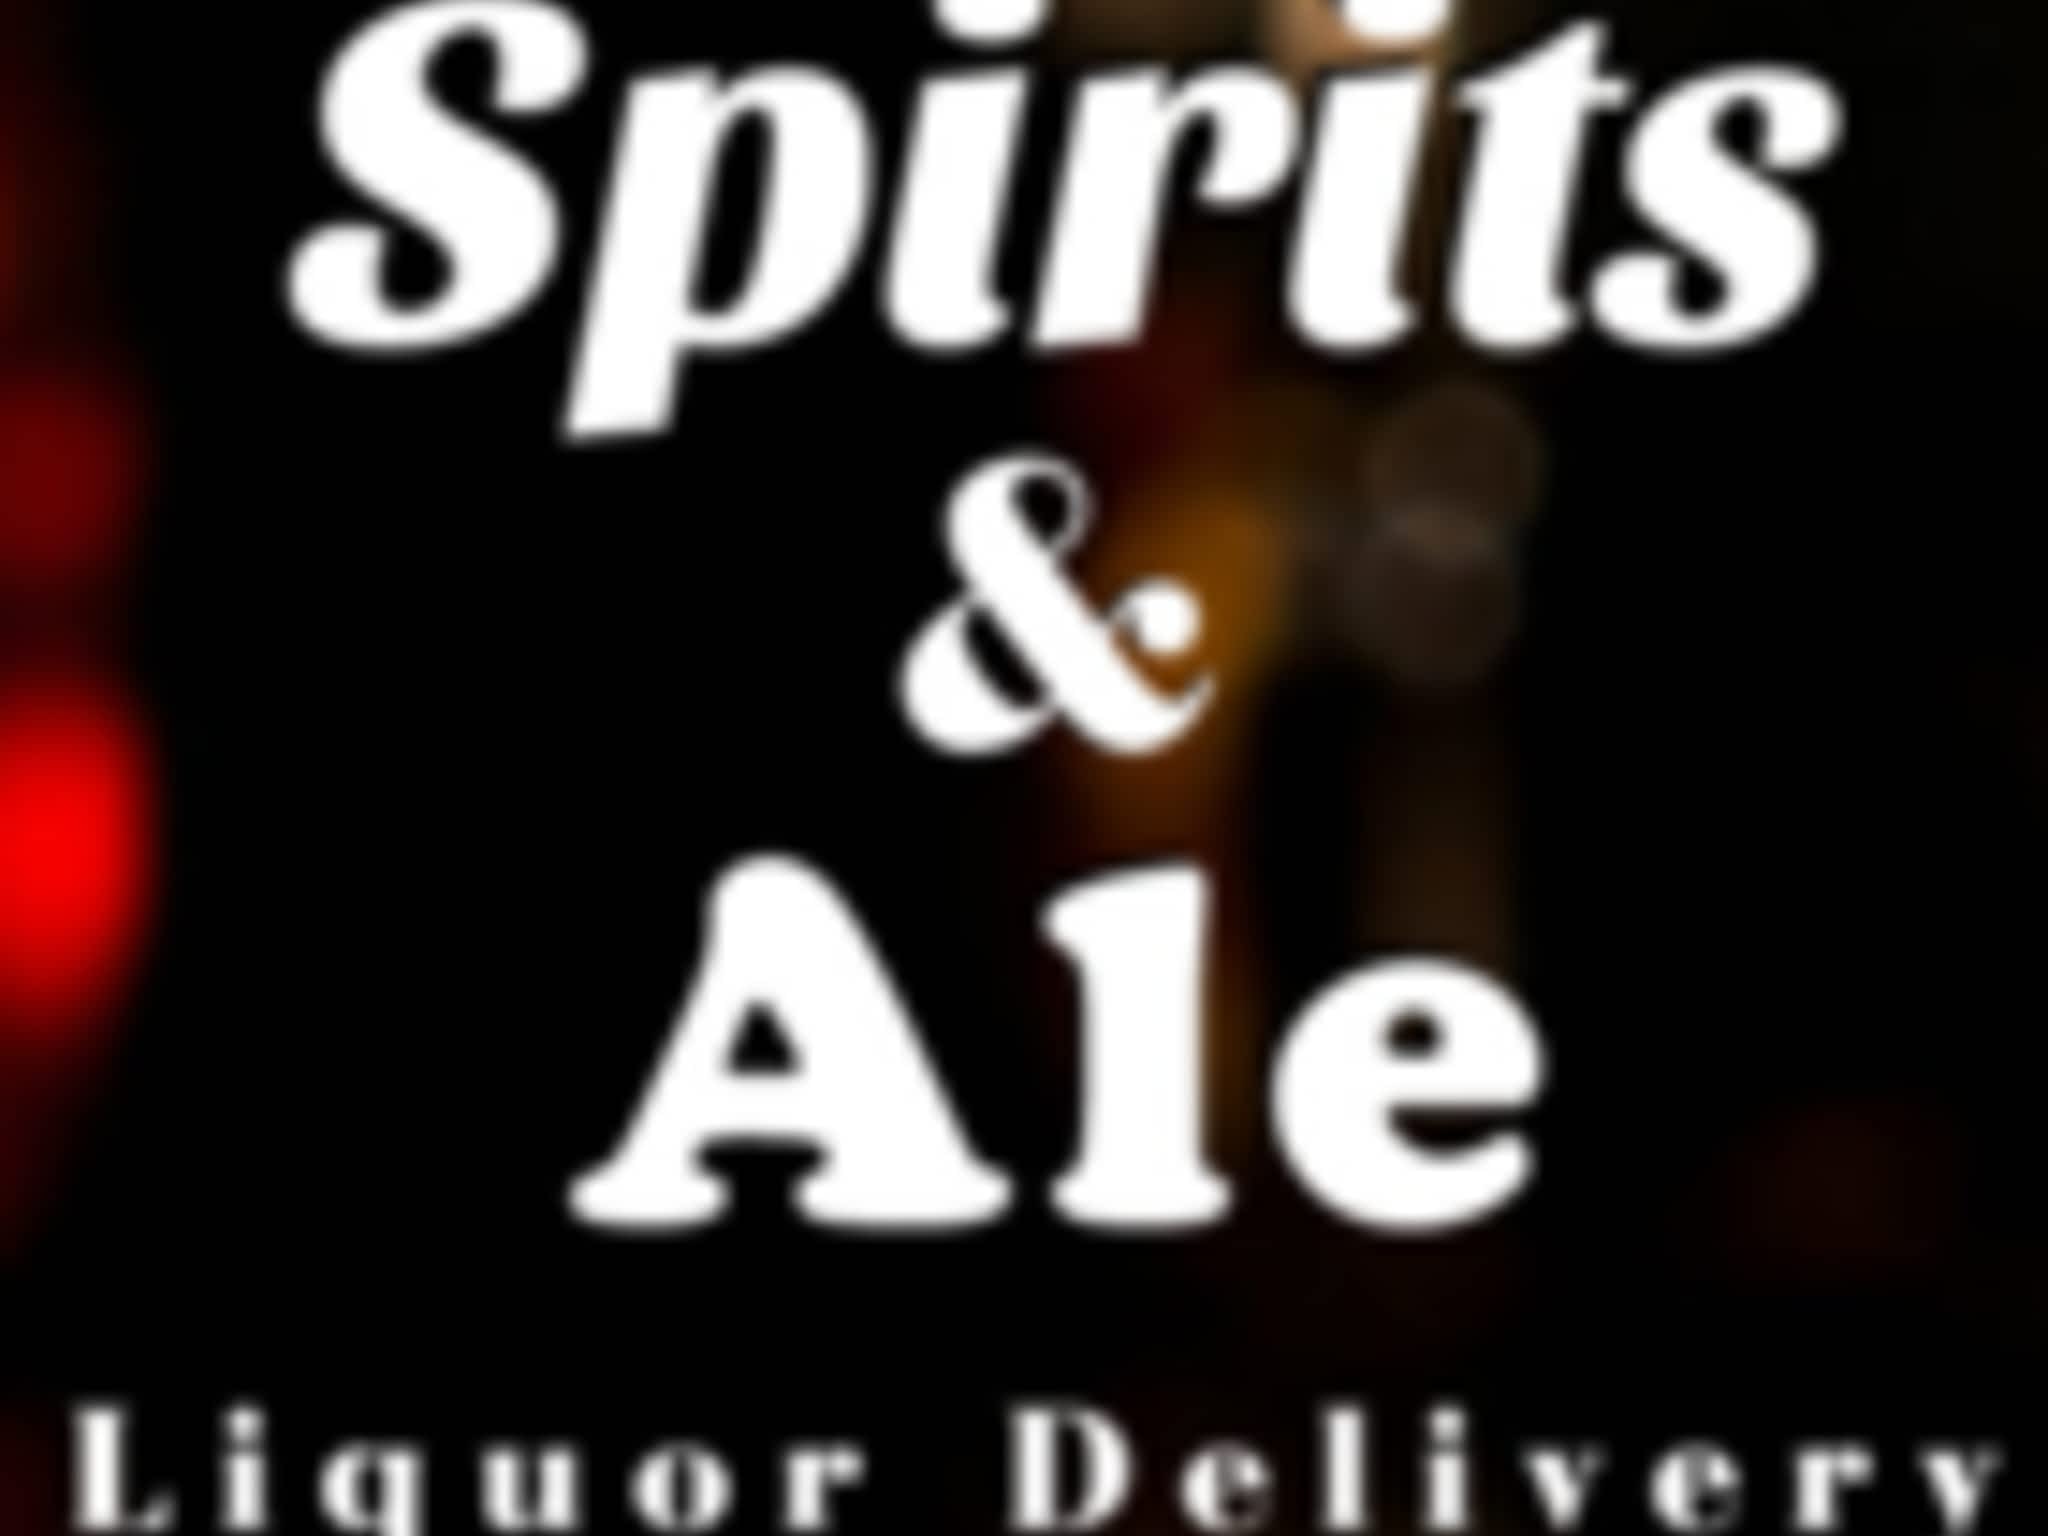 photo Spirits & Ale Liquor Delivery